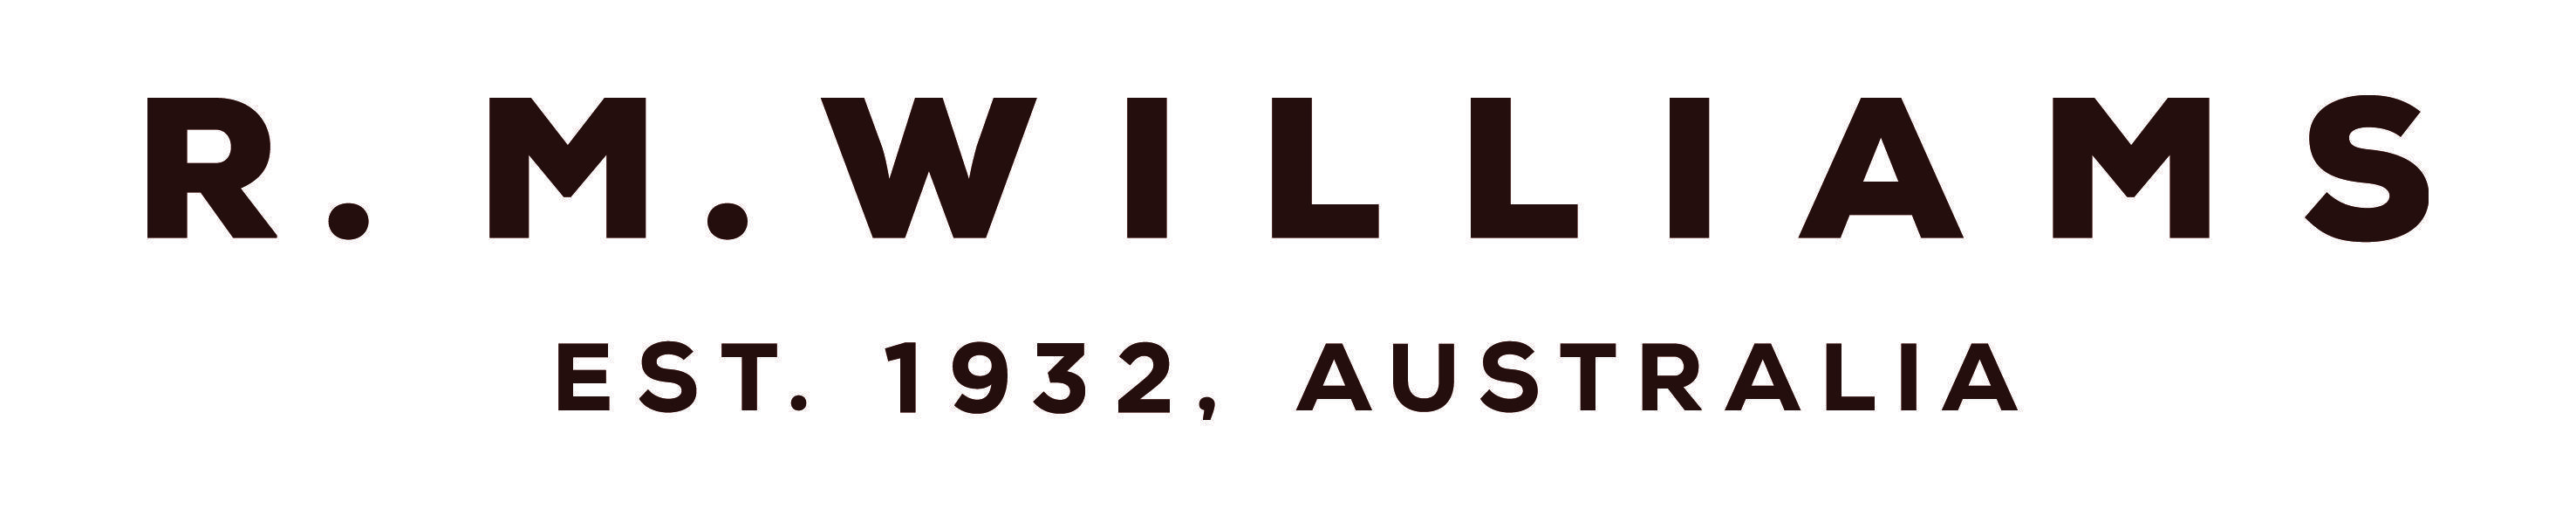 Australian Clothing Company Logo - image for australian clothing company logo desktophddesignwall3D.ga